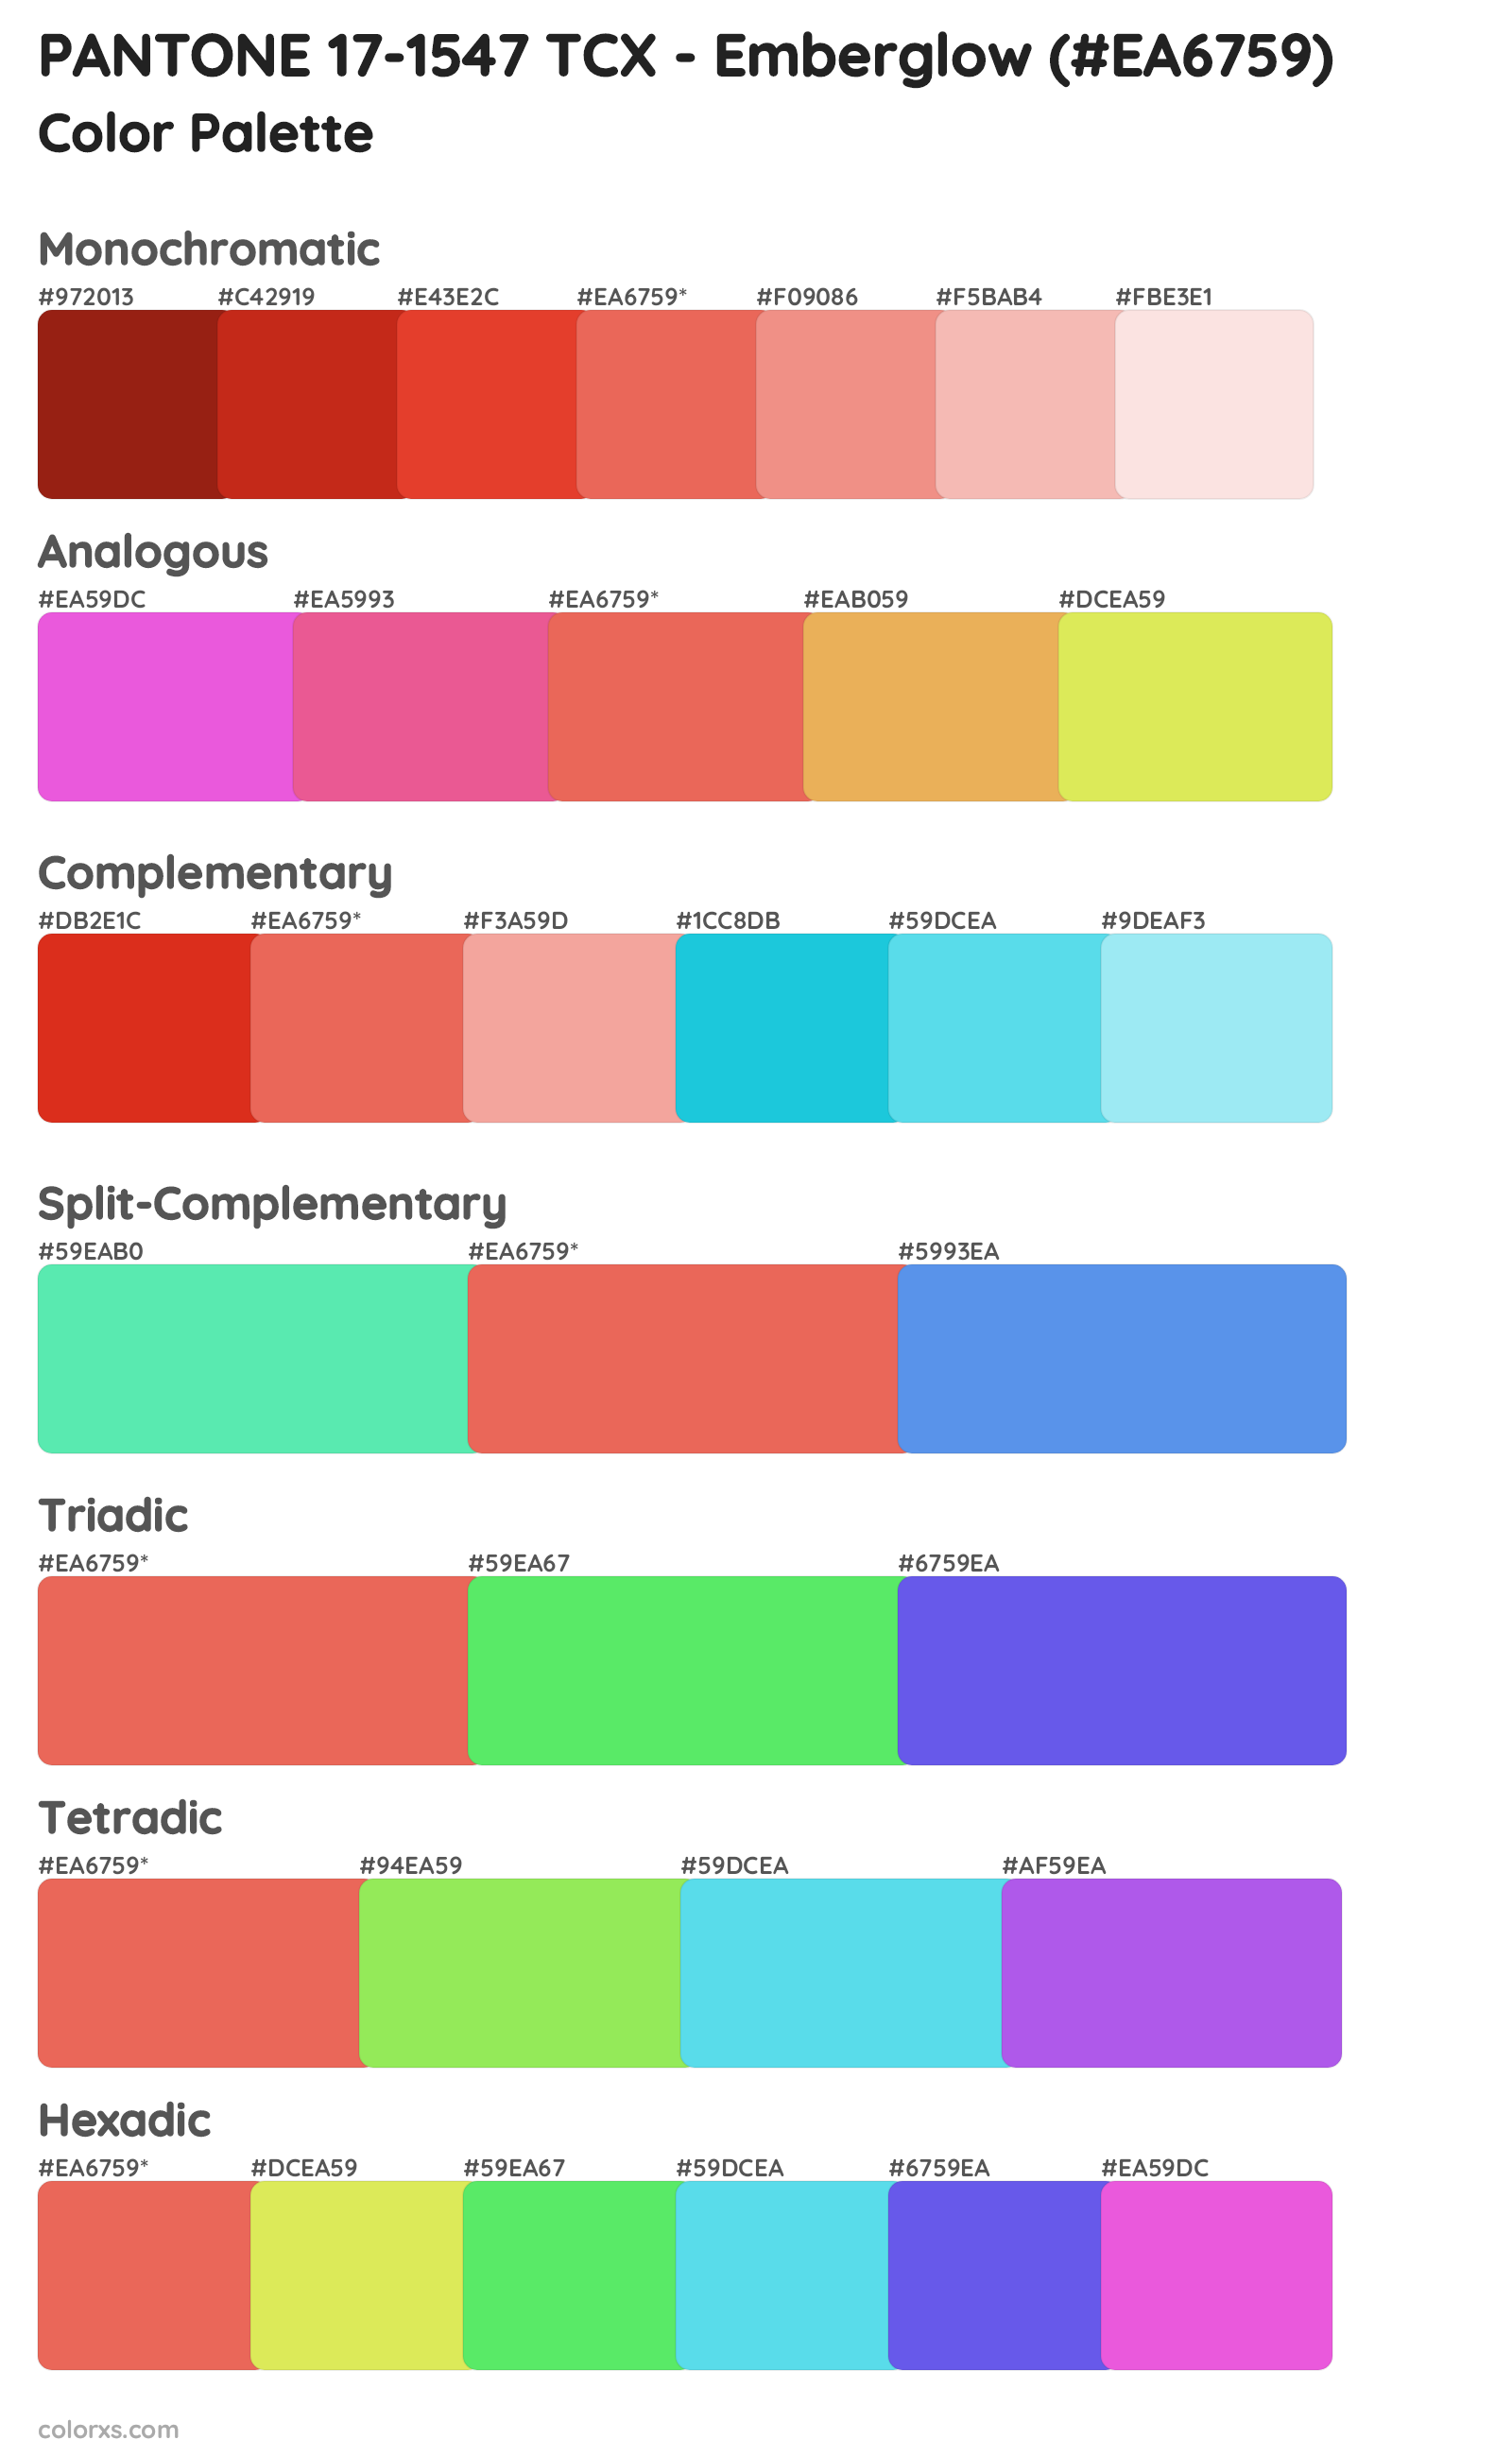 PANTONE 17-1547 TCX - Emberglow Color Scheme Palettes